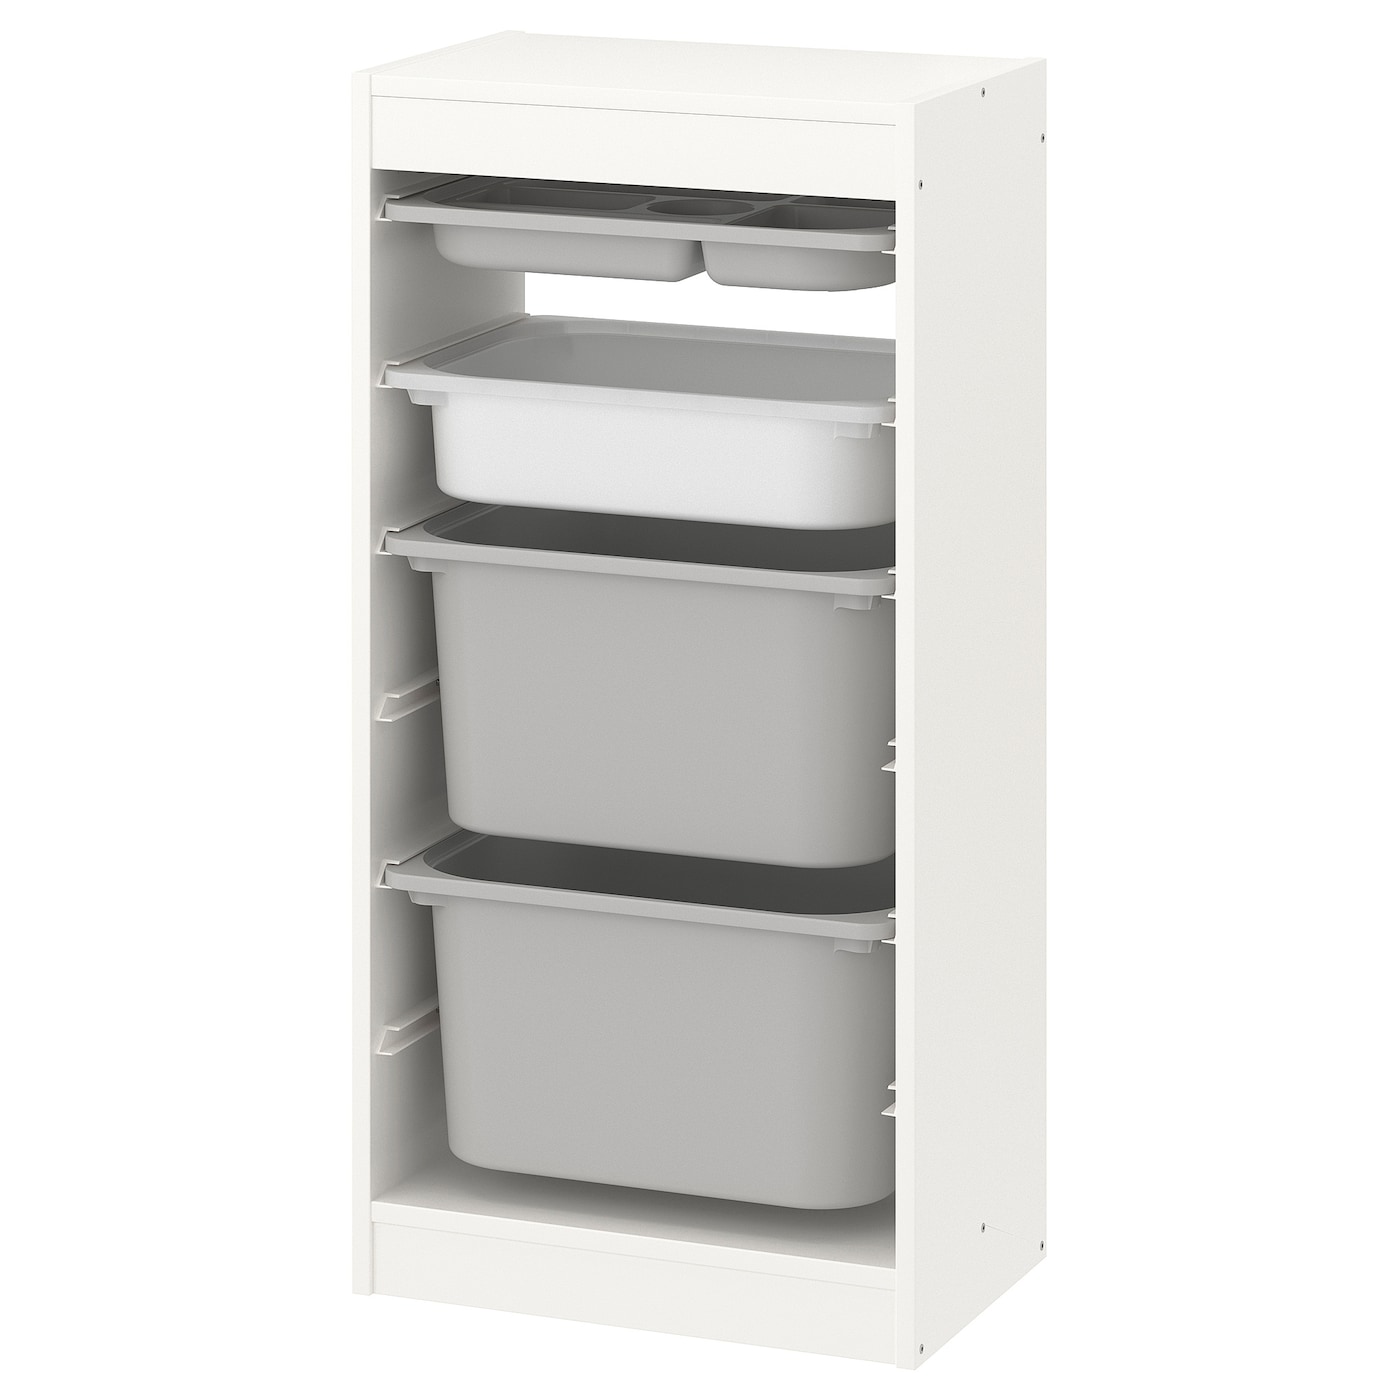 Стеллаж - IKEA TROFAST, 46х30х94 см, белый/бело-серый, ТРУФАСТ ИКЕА